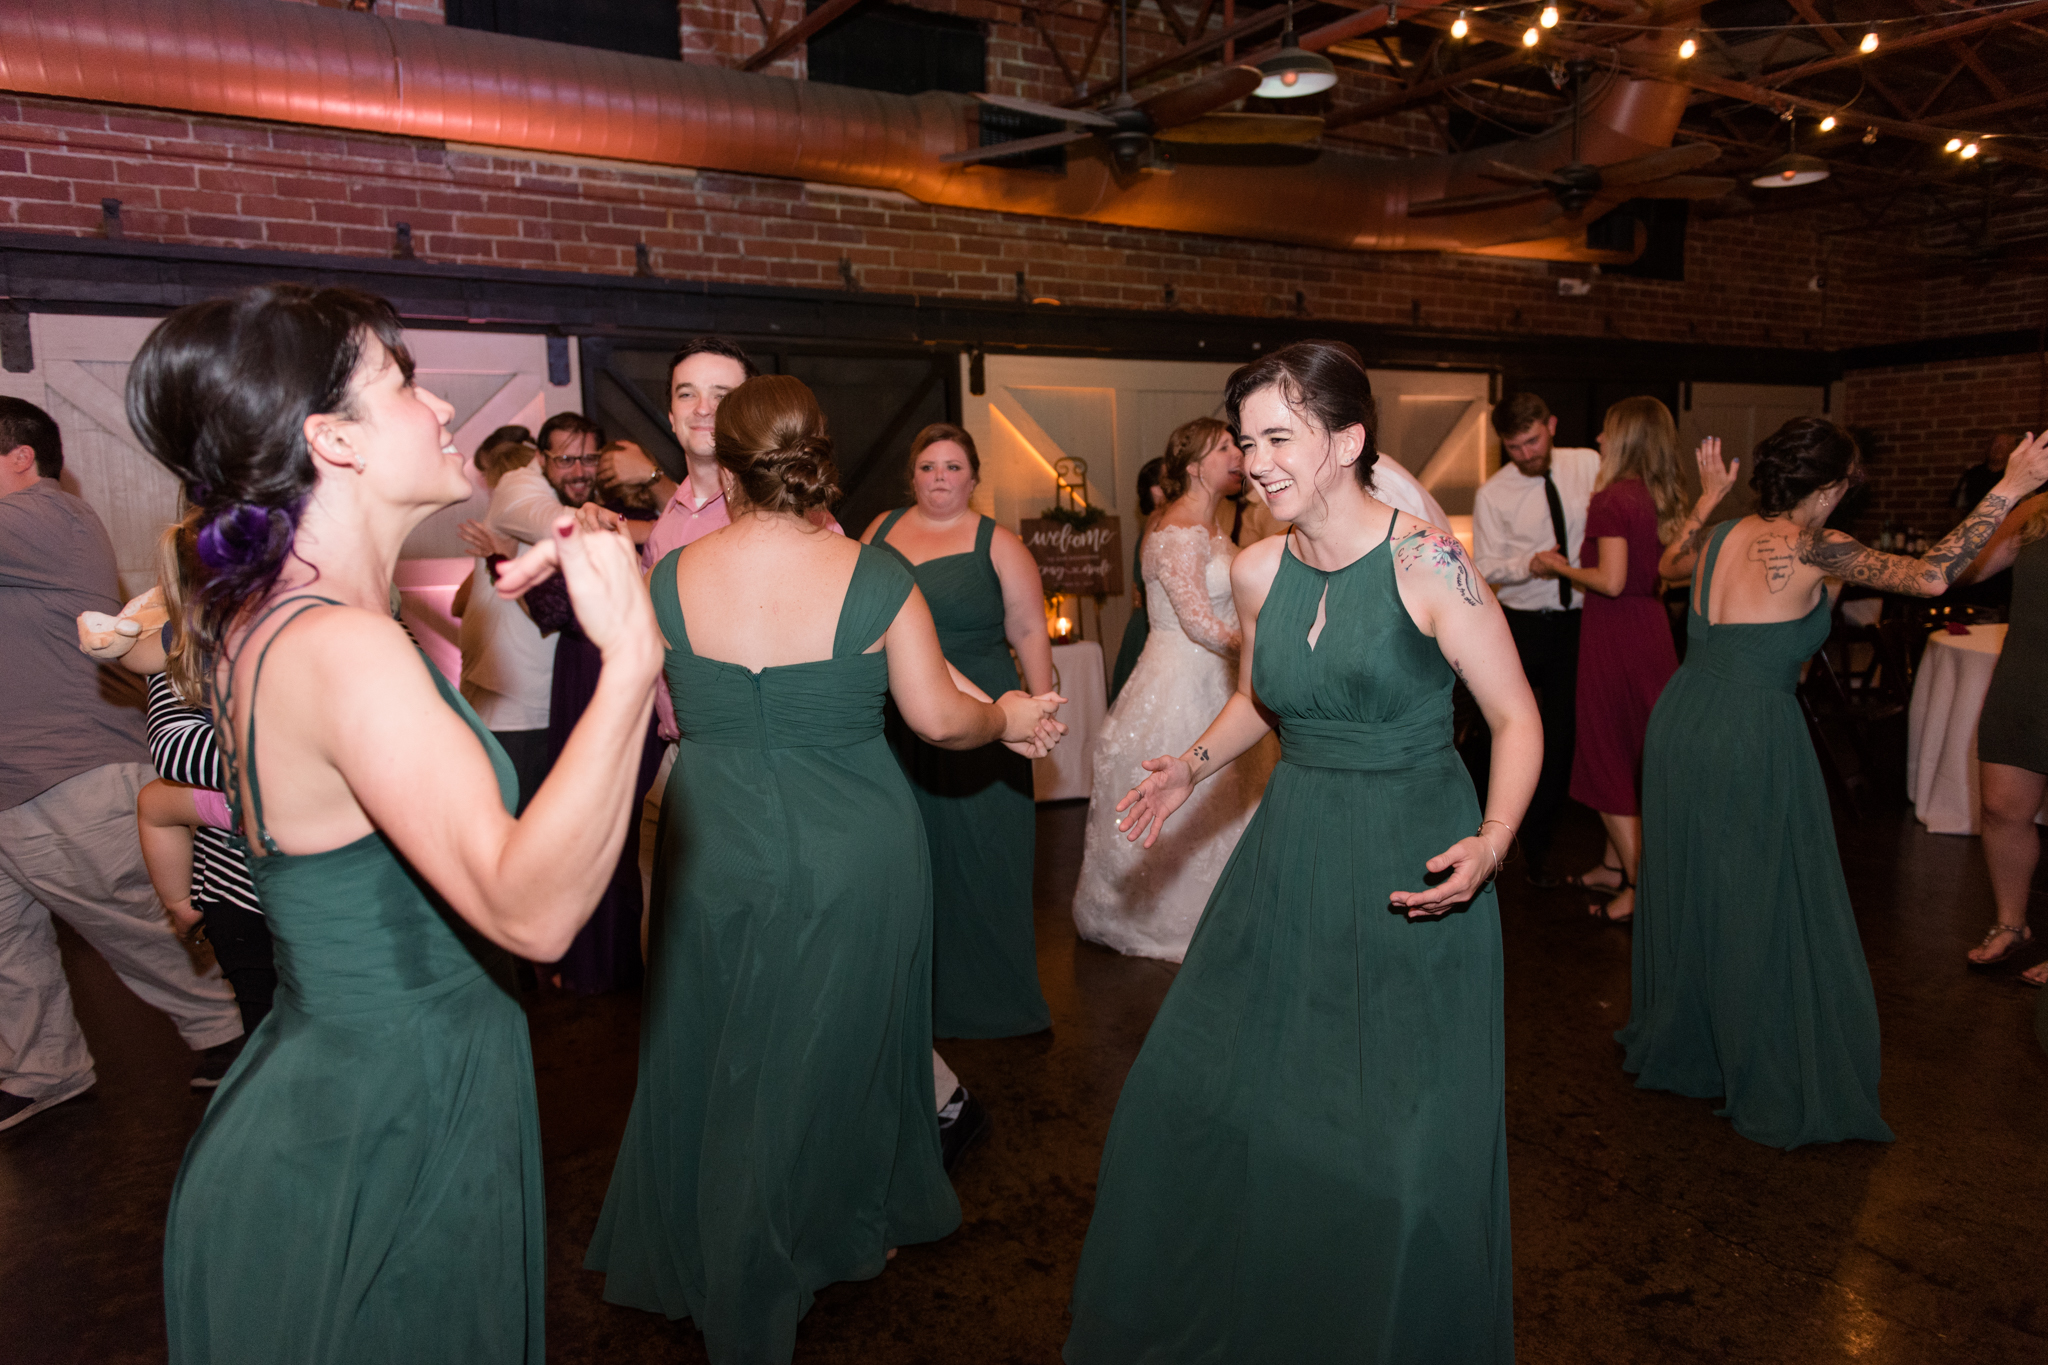 Bridesmaids dance at wedding reception.